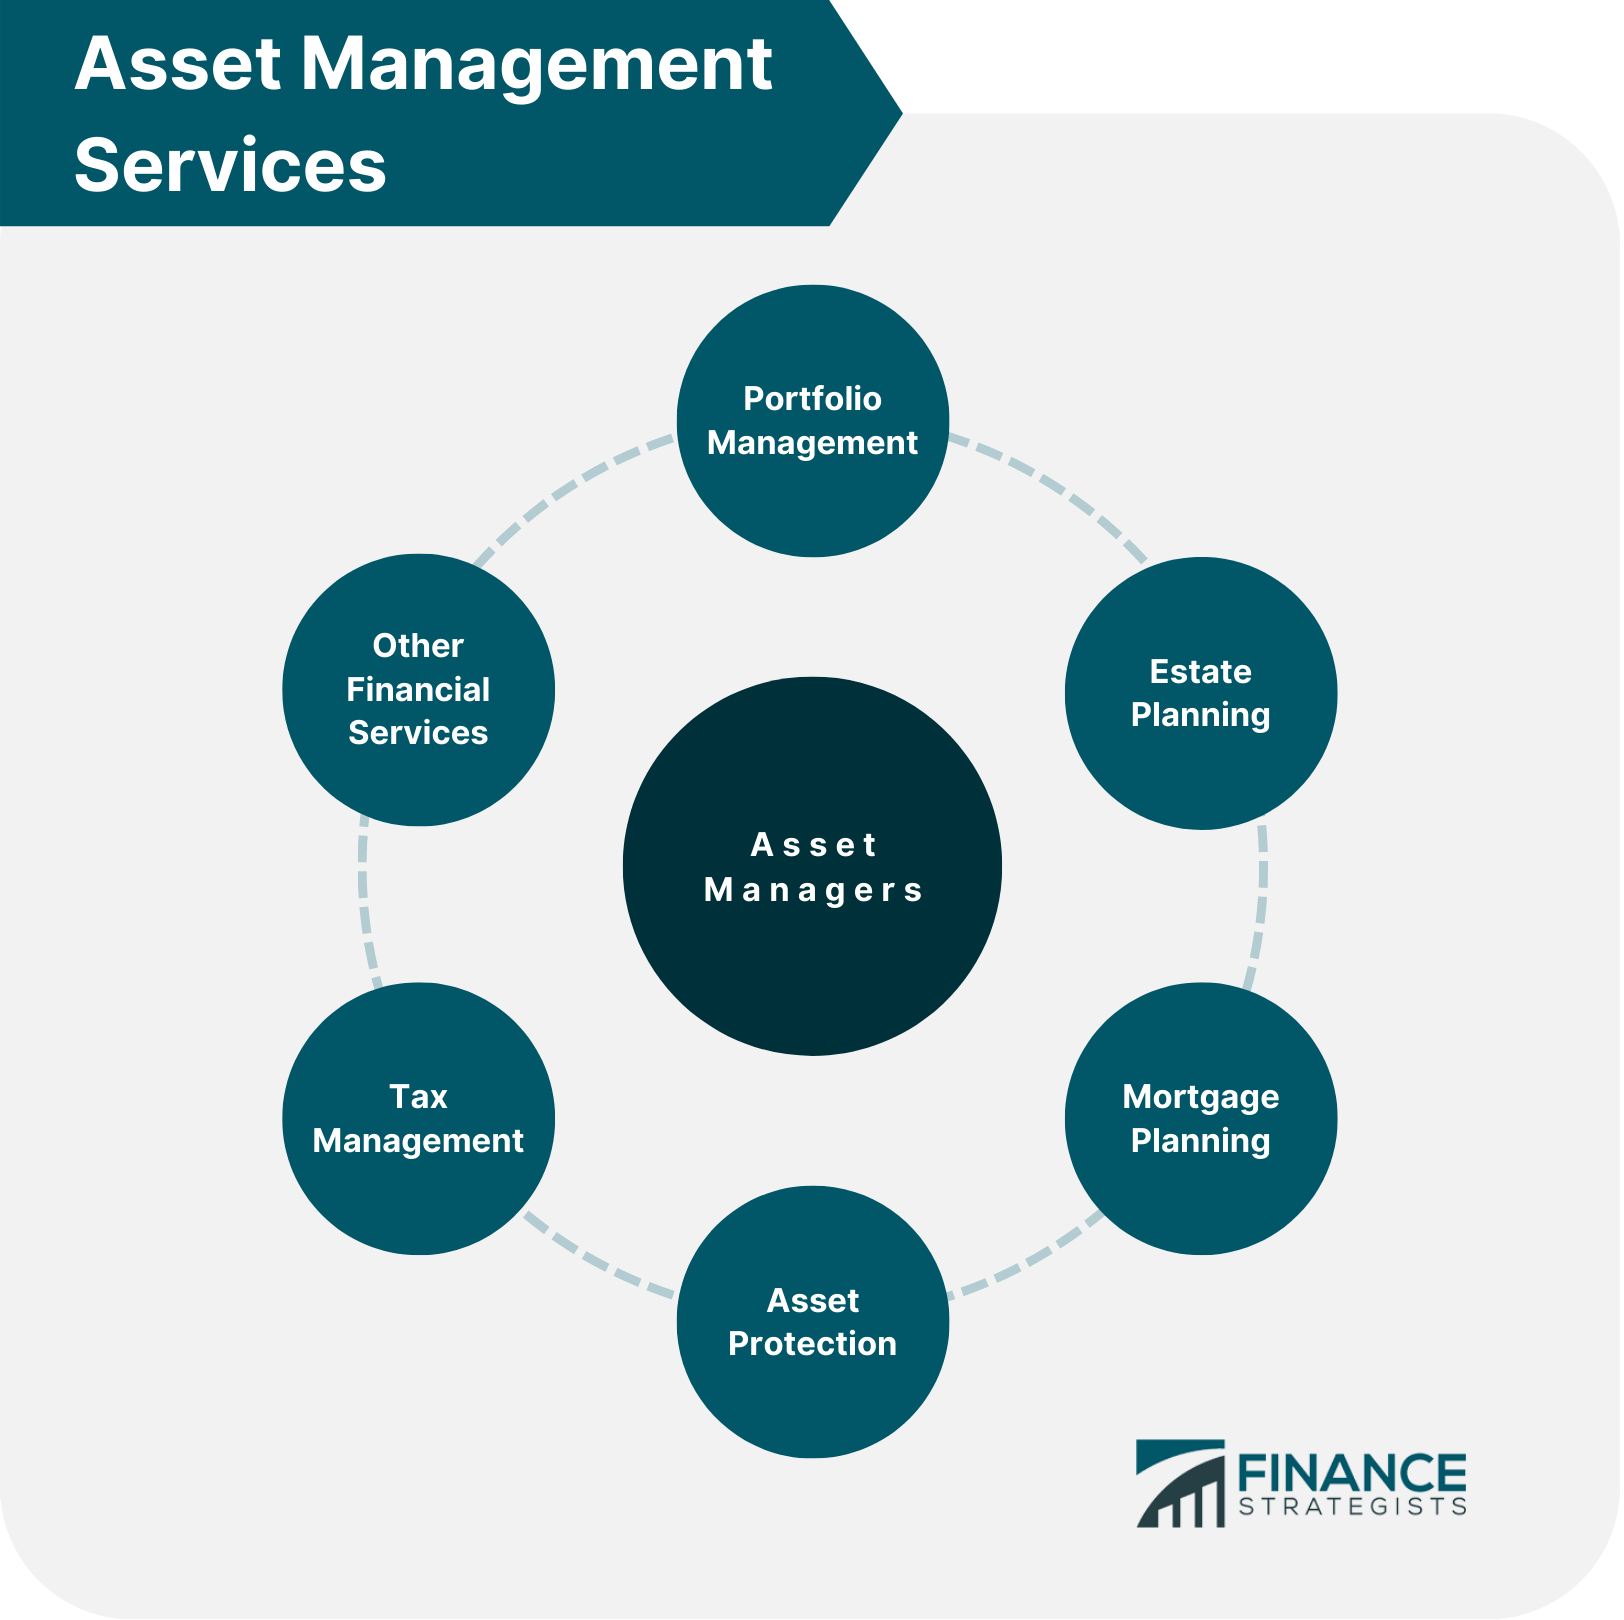 https://www.financestrategists.com/wealth-management/asset-management/